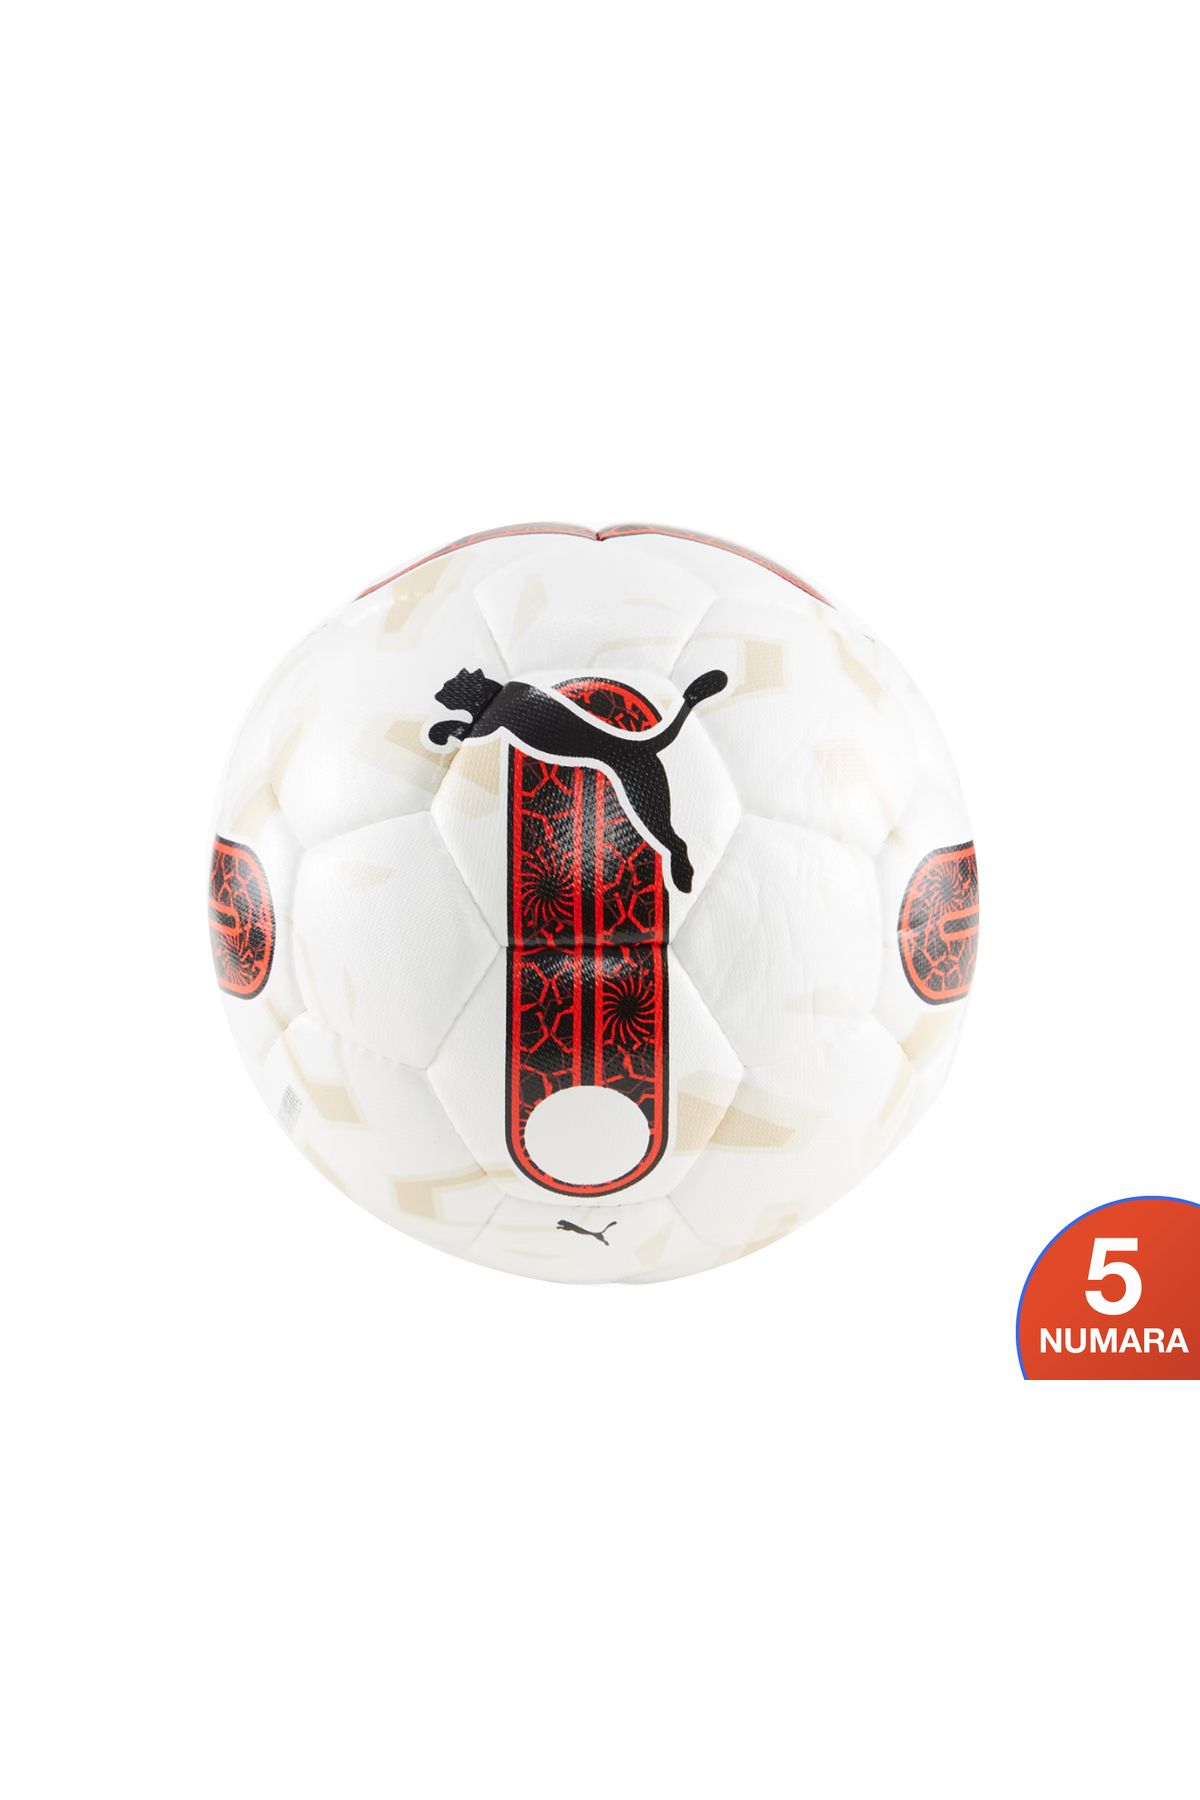 Puma Orbita Süper Lig 5 Hs Futbol Topu Renkli Süper Lig Resmi Futbol Topu